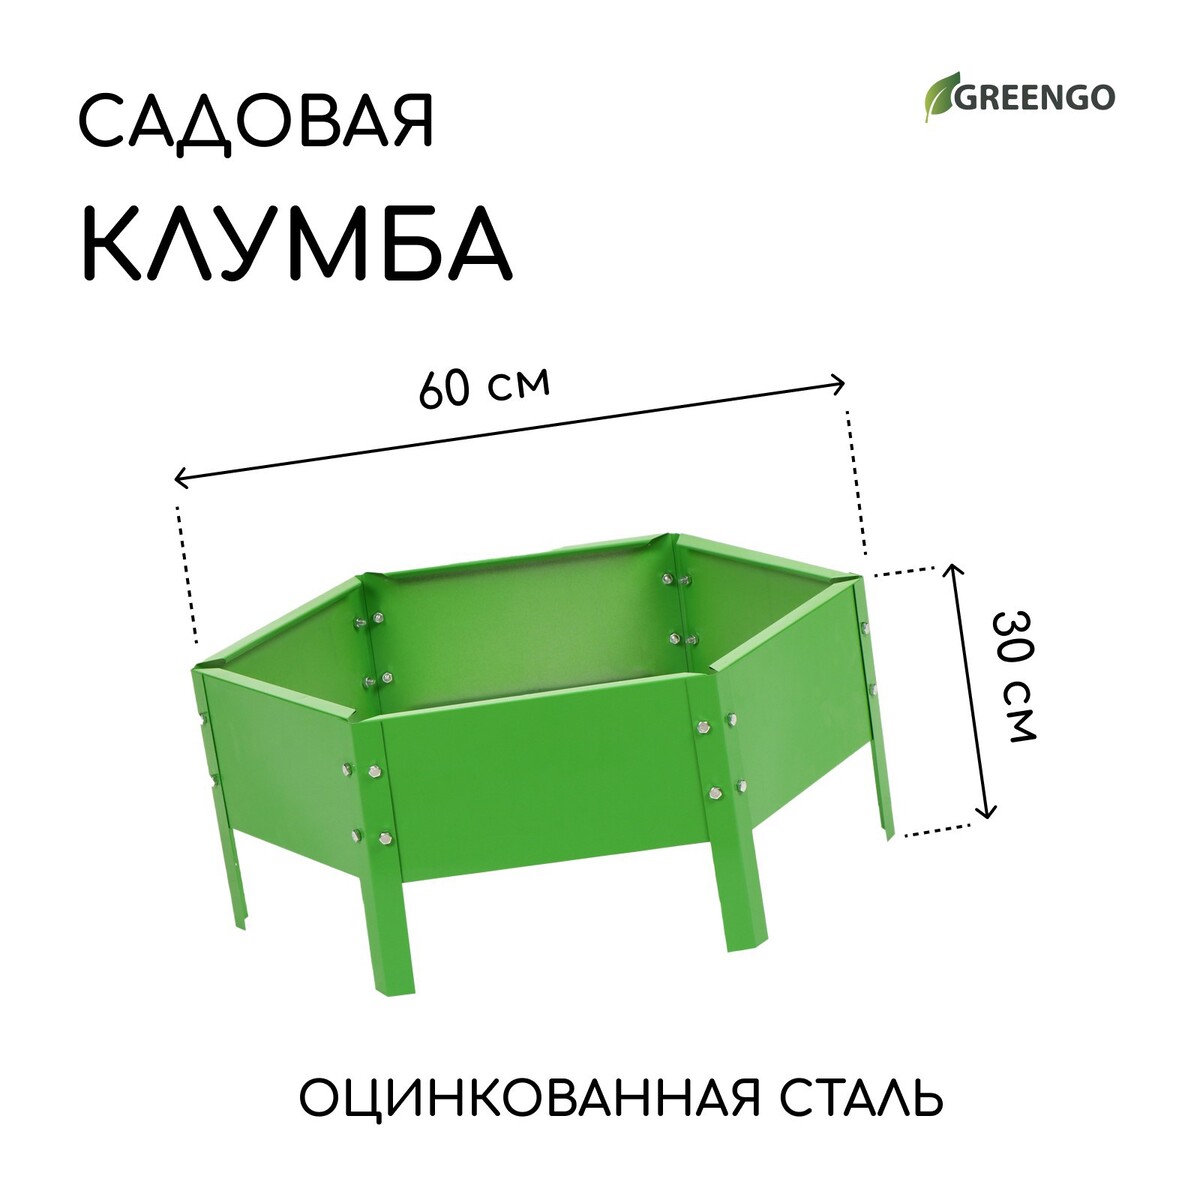 Клумба оцинкованная, d = 60 см, h = 15 см, ярко-зеленая, greengo краска ма 15 царицынские краски ярко зеленая 0 9кг